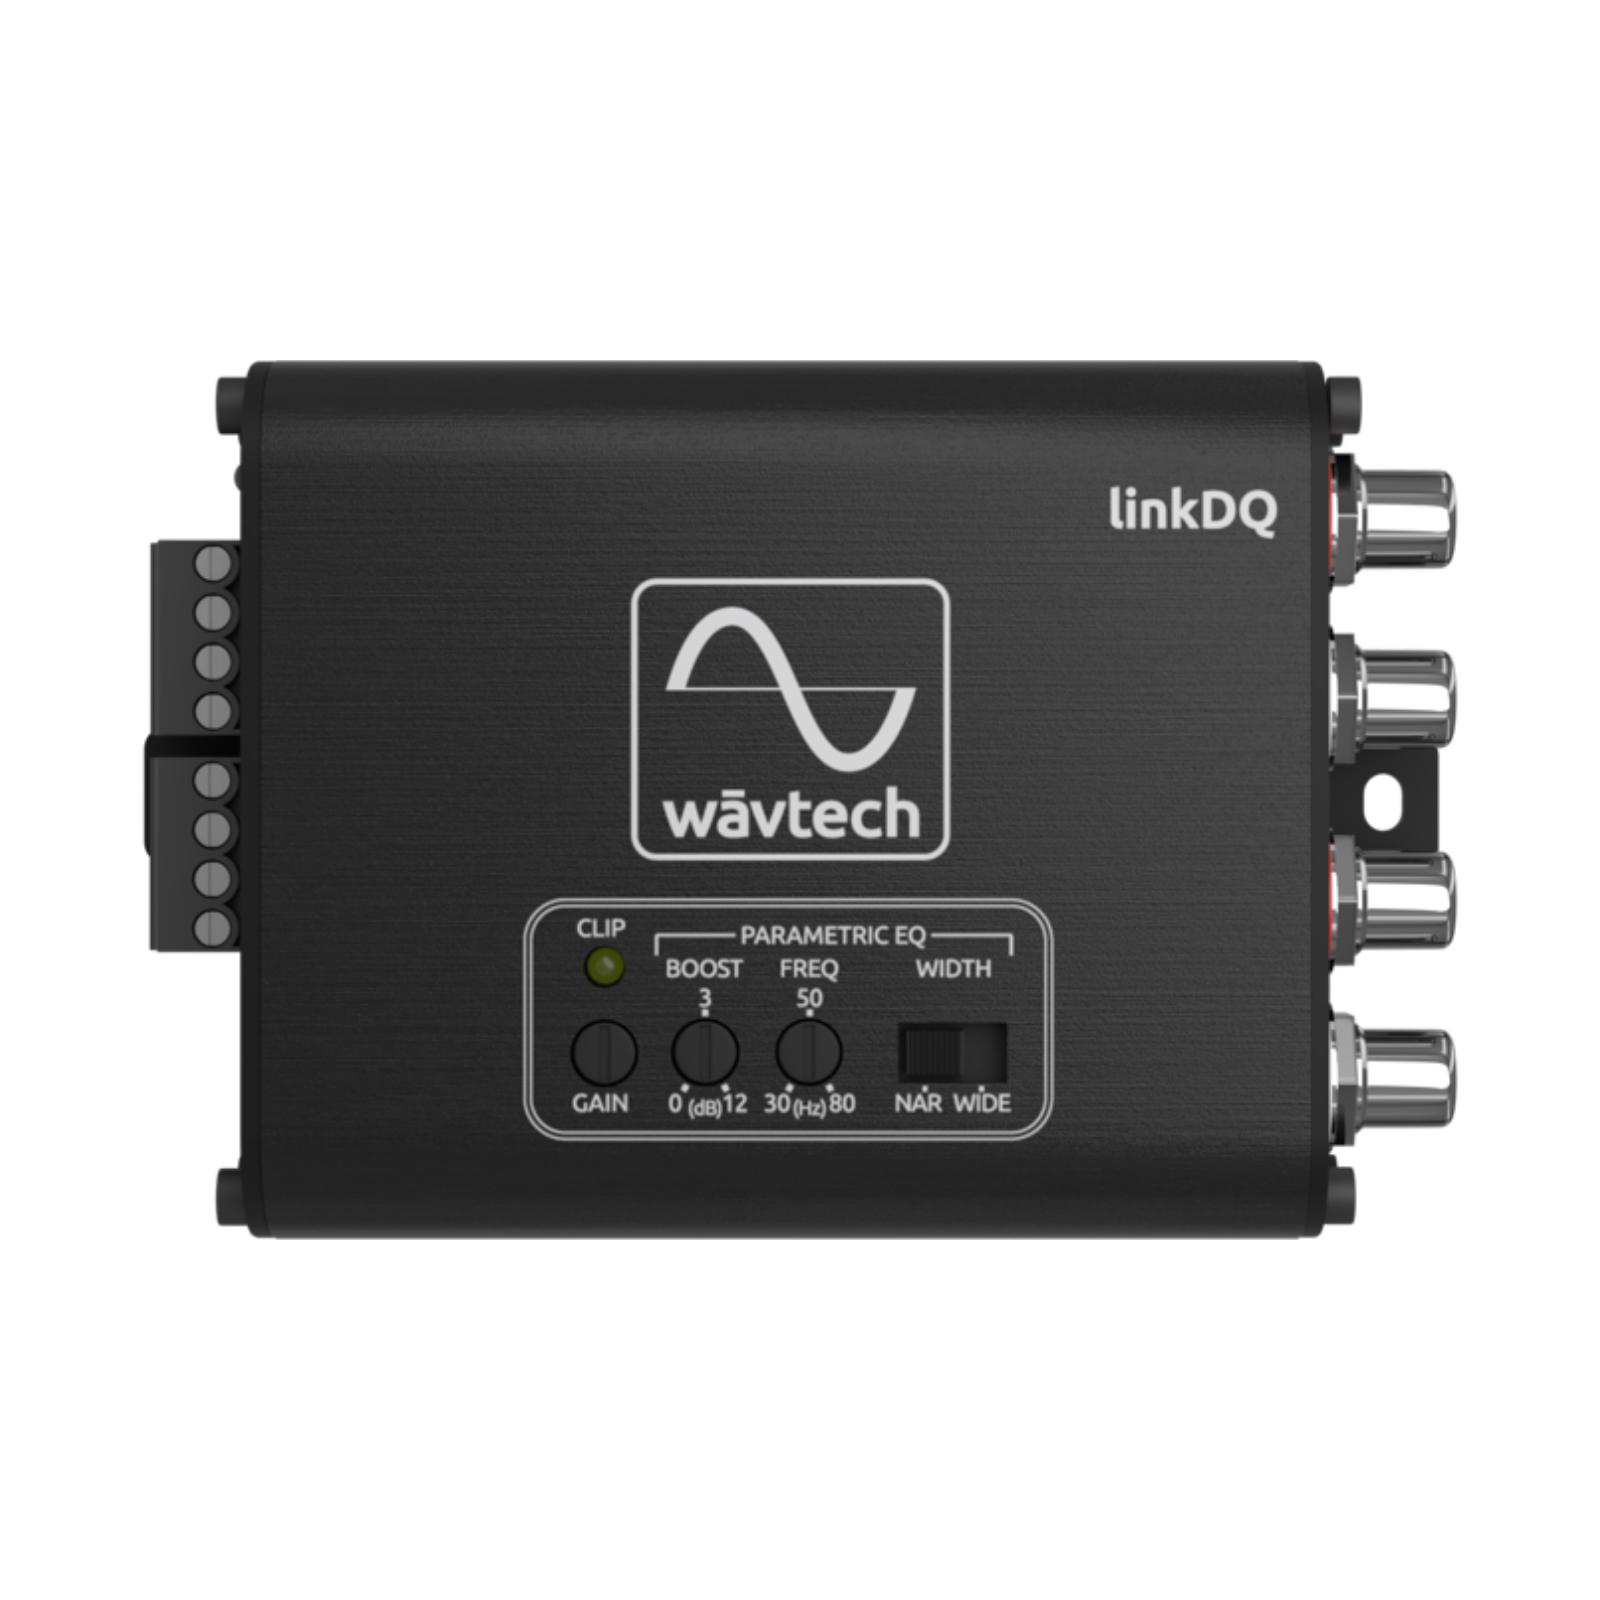 Wavtech LinkDQ 2 Channel LOC